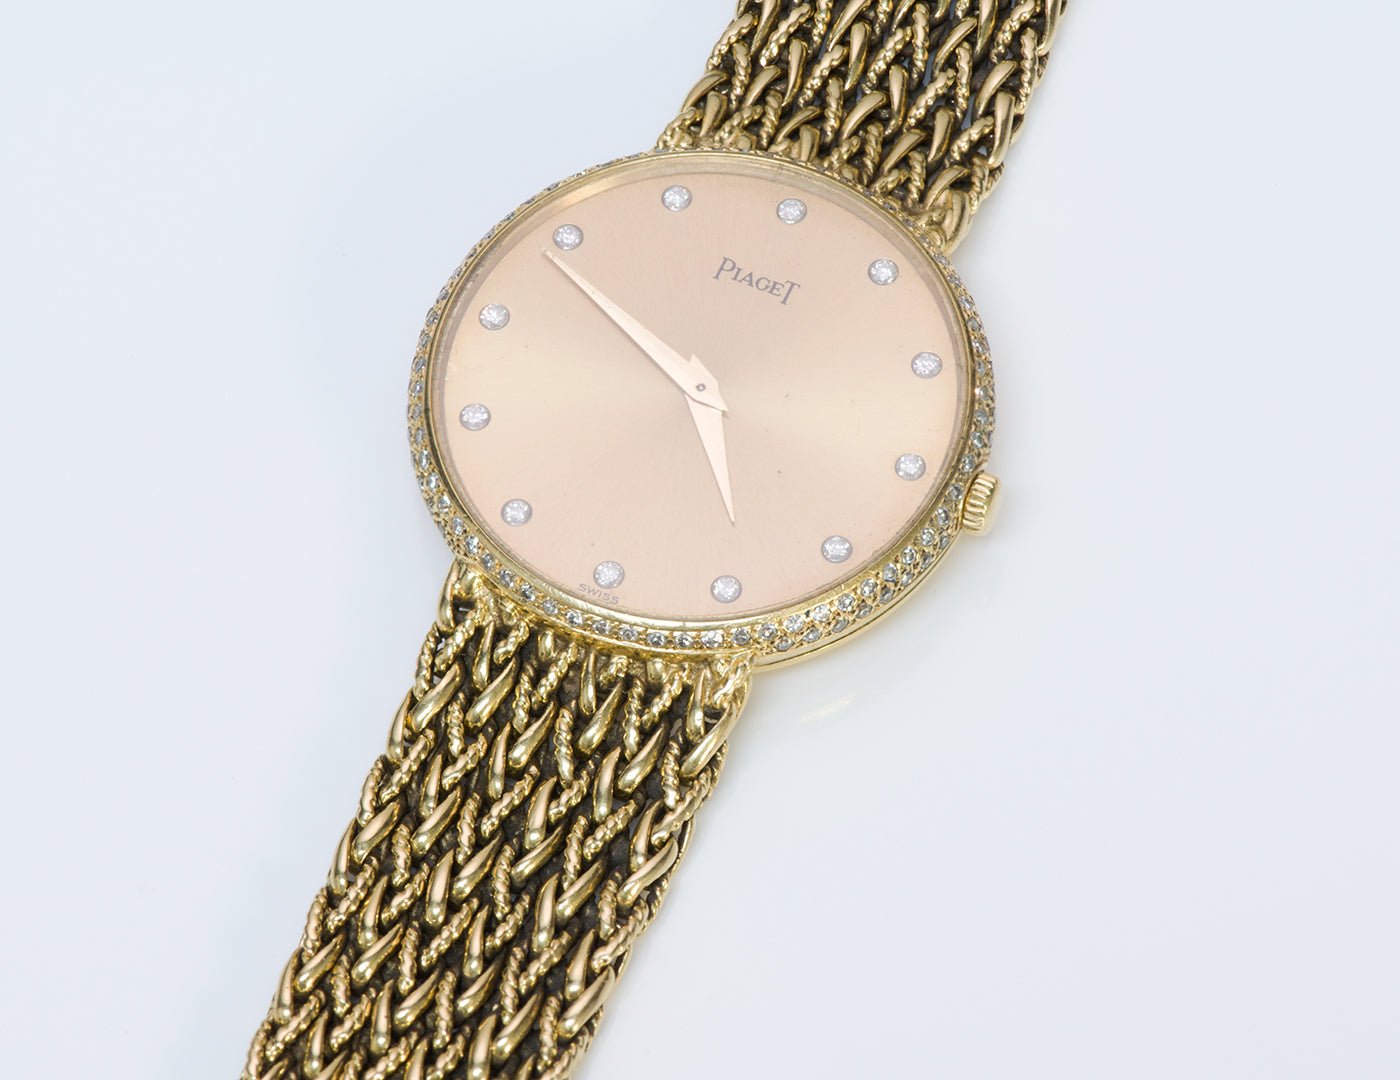 Piaget 18K Gold Diamond Watch